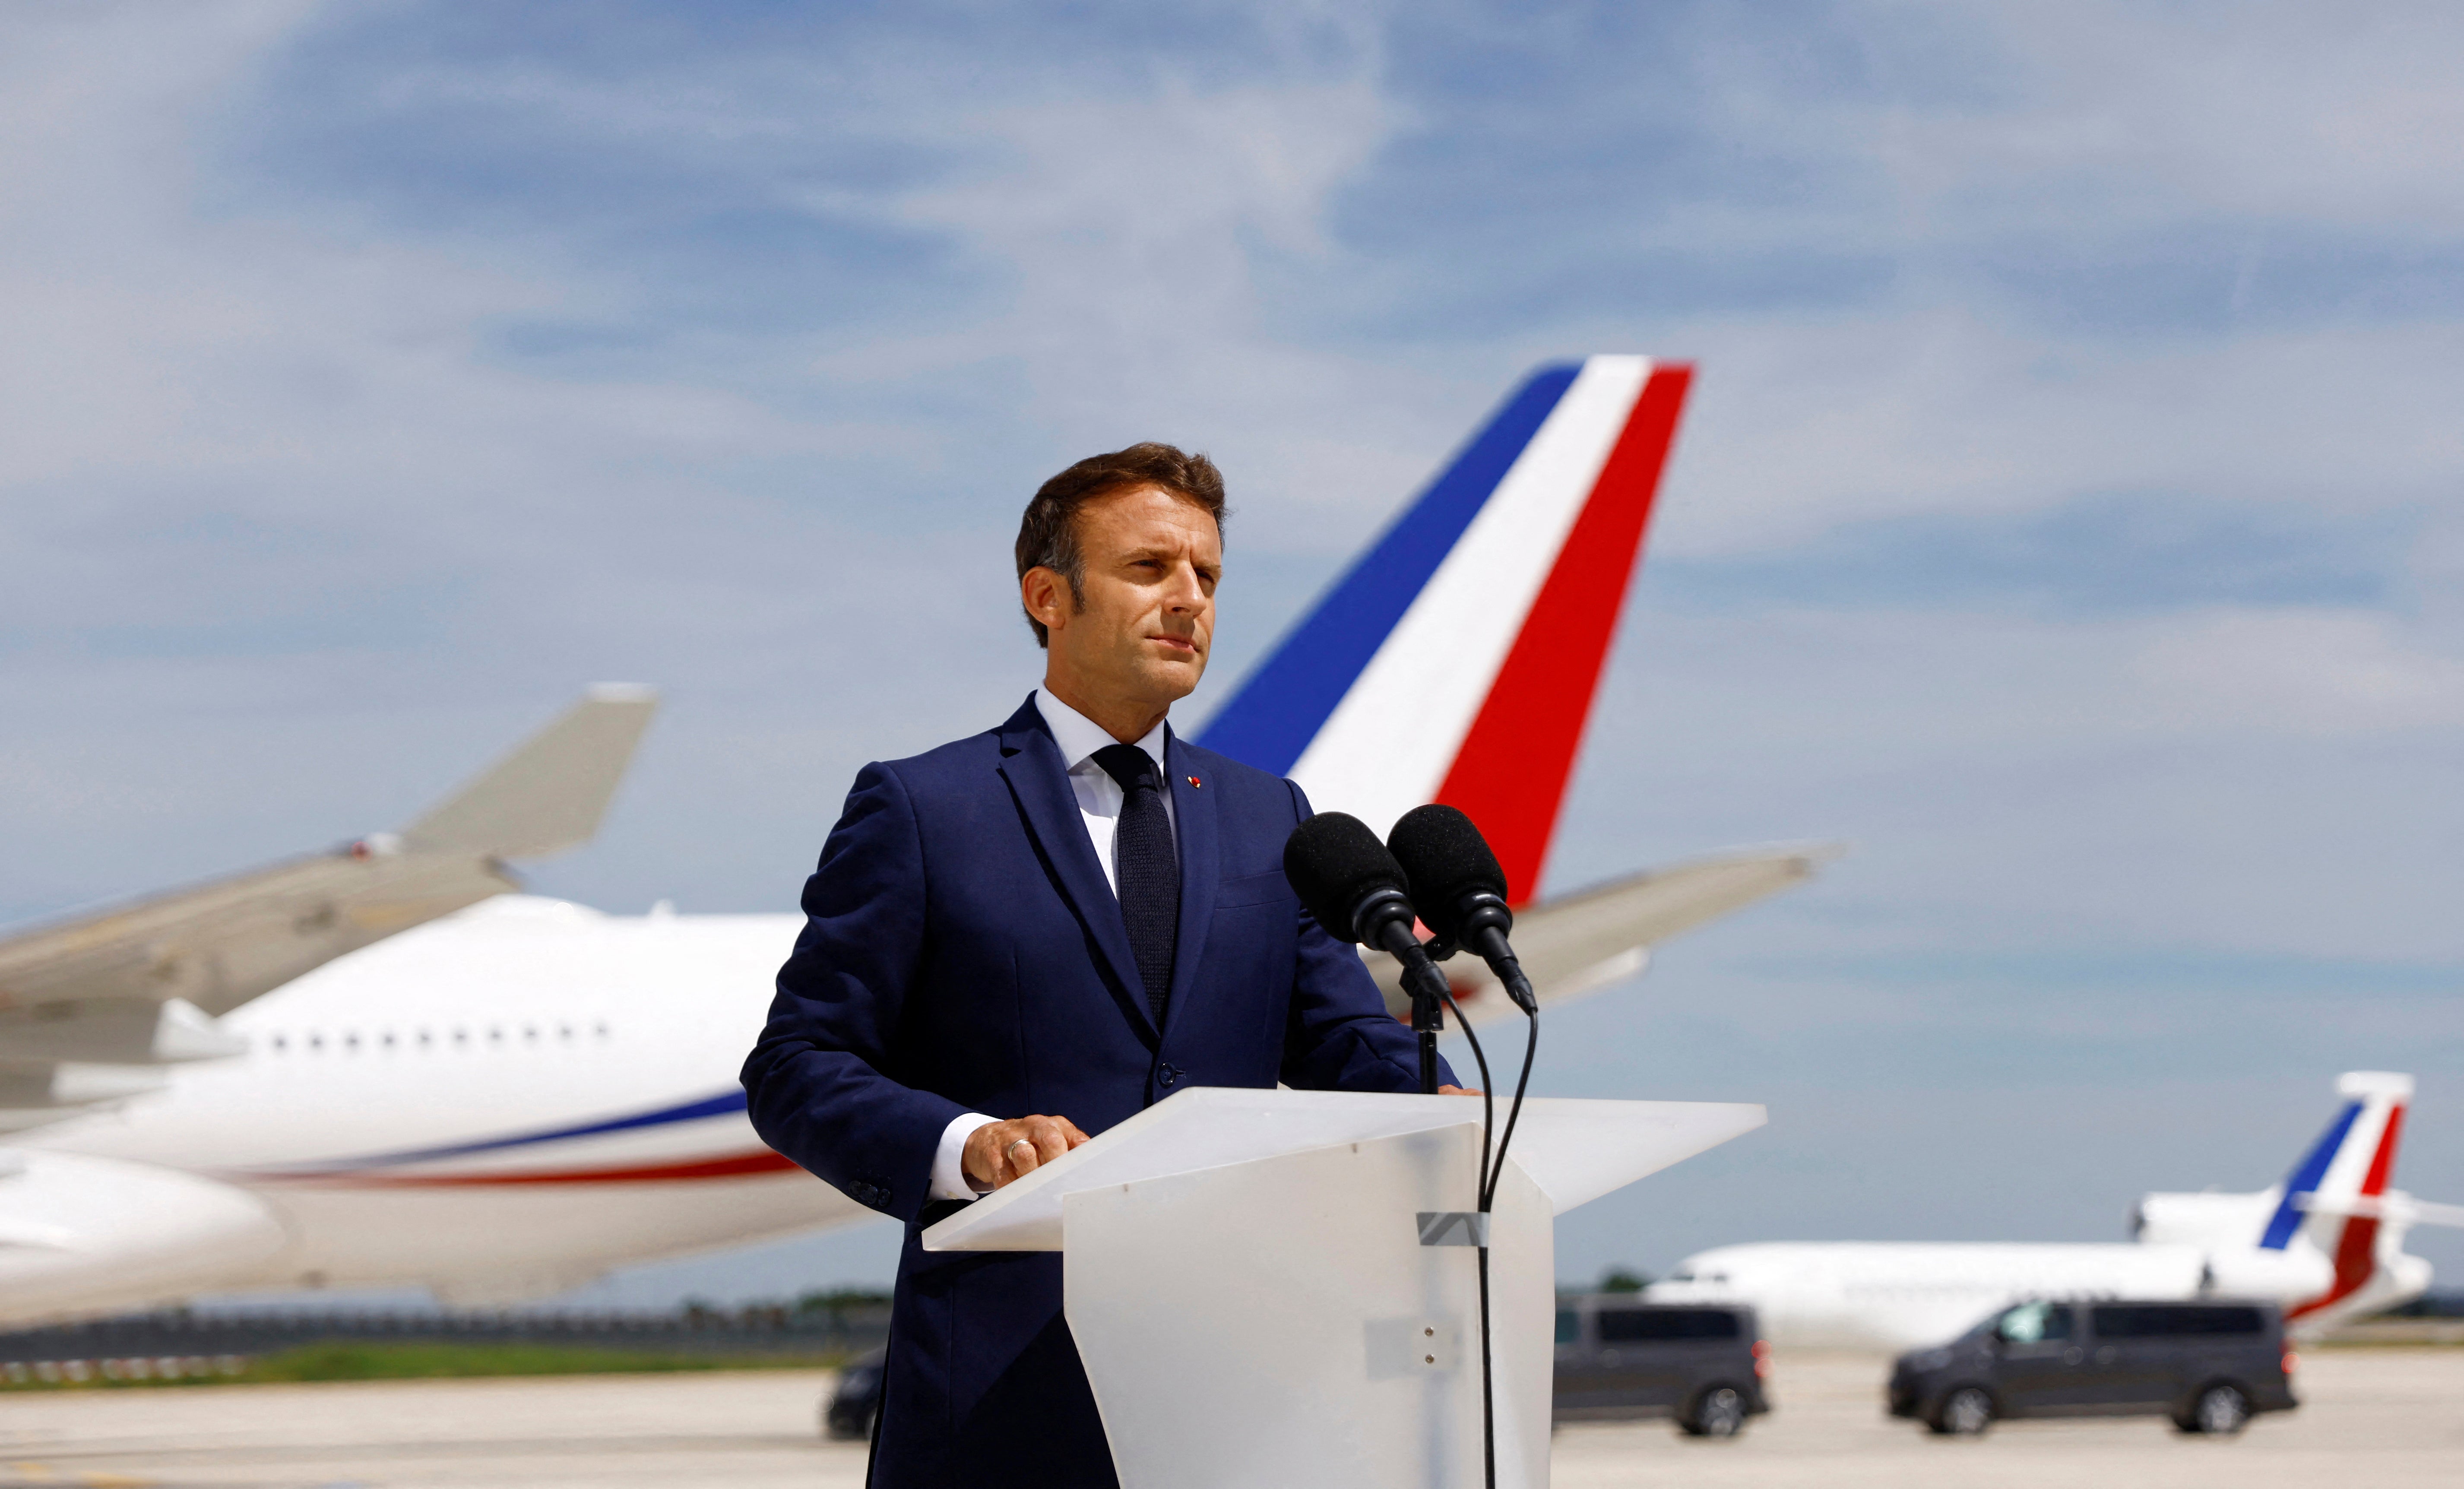 Macron addresses voters before heading to Ukraine on Tuesday